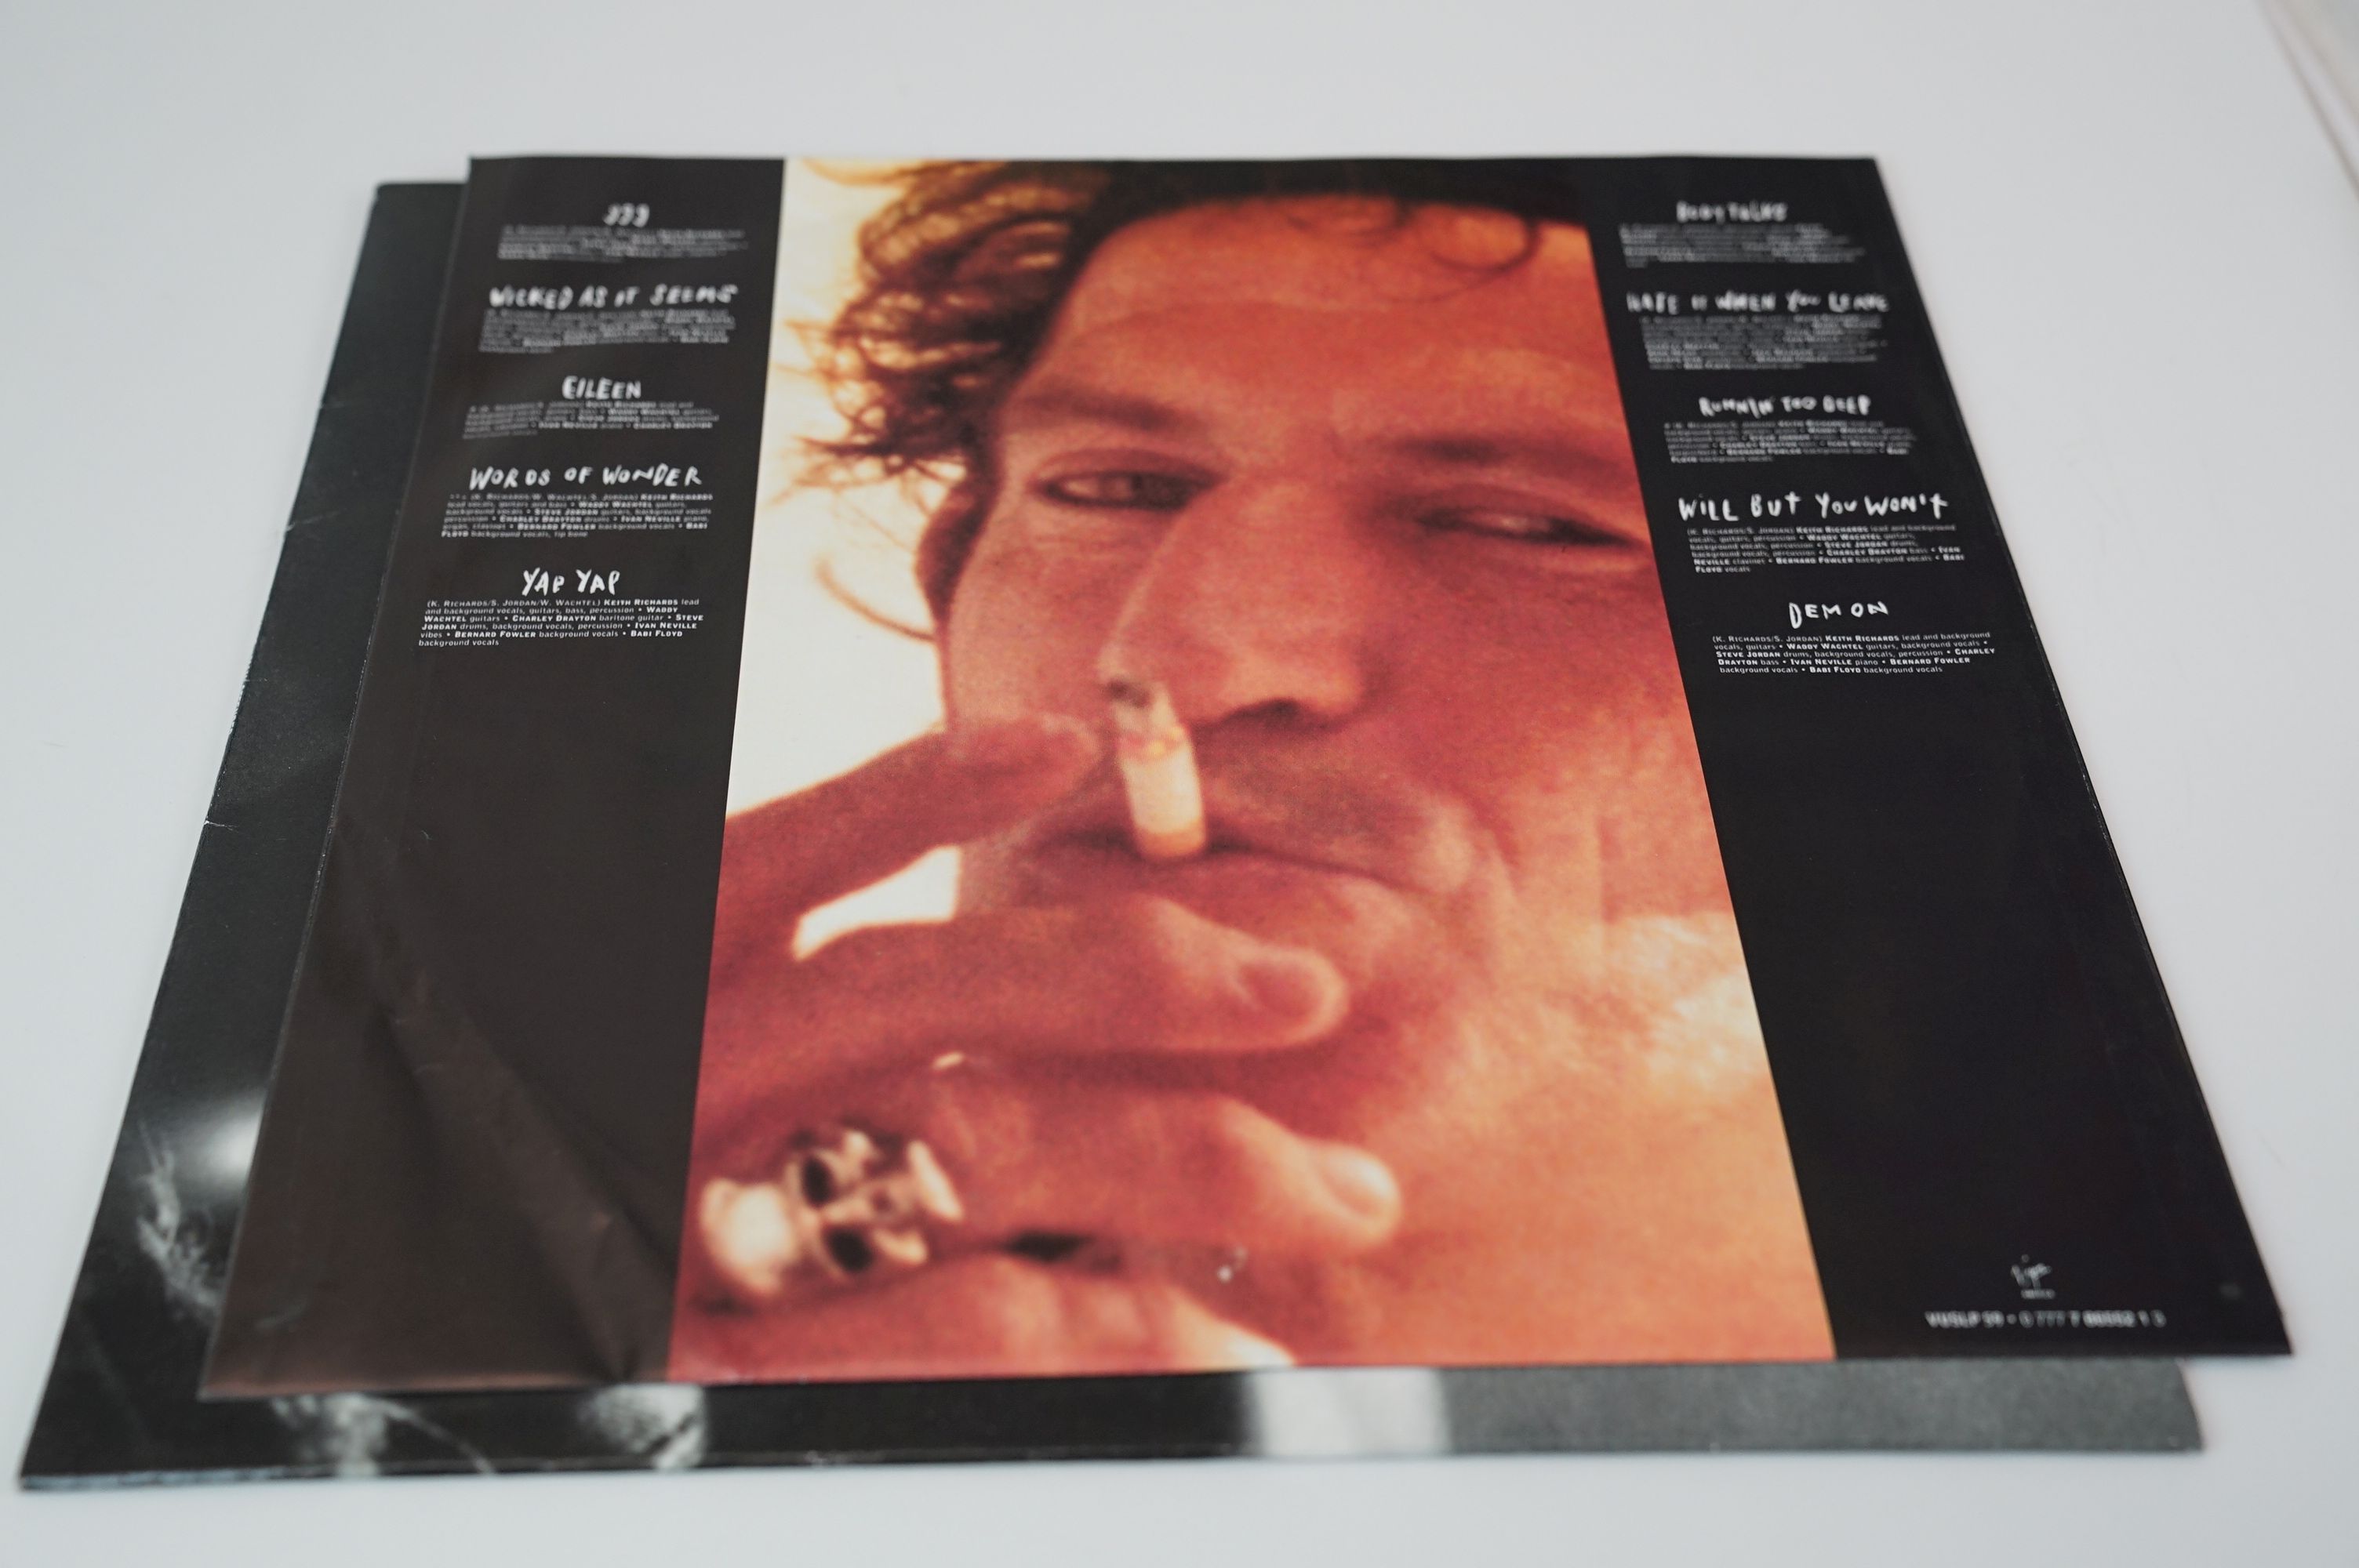 Vinyl - Keith Richards Main Offender LP on Virgin VUSLP 59 with inner, excellent - Image 3 of 8